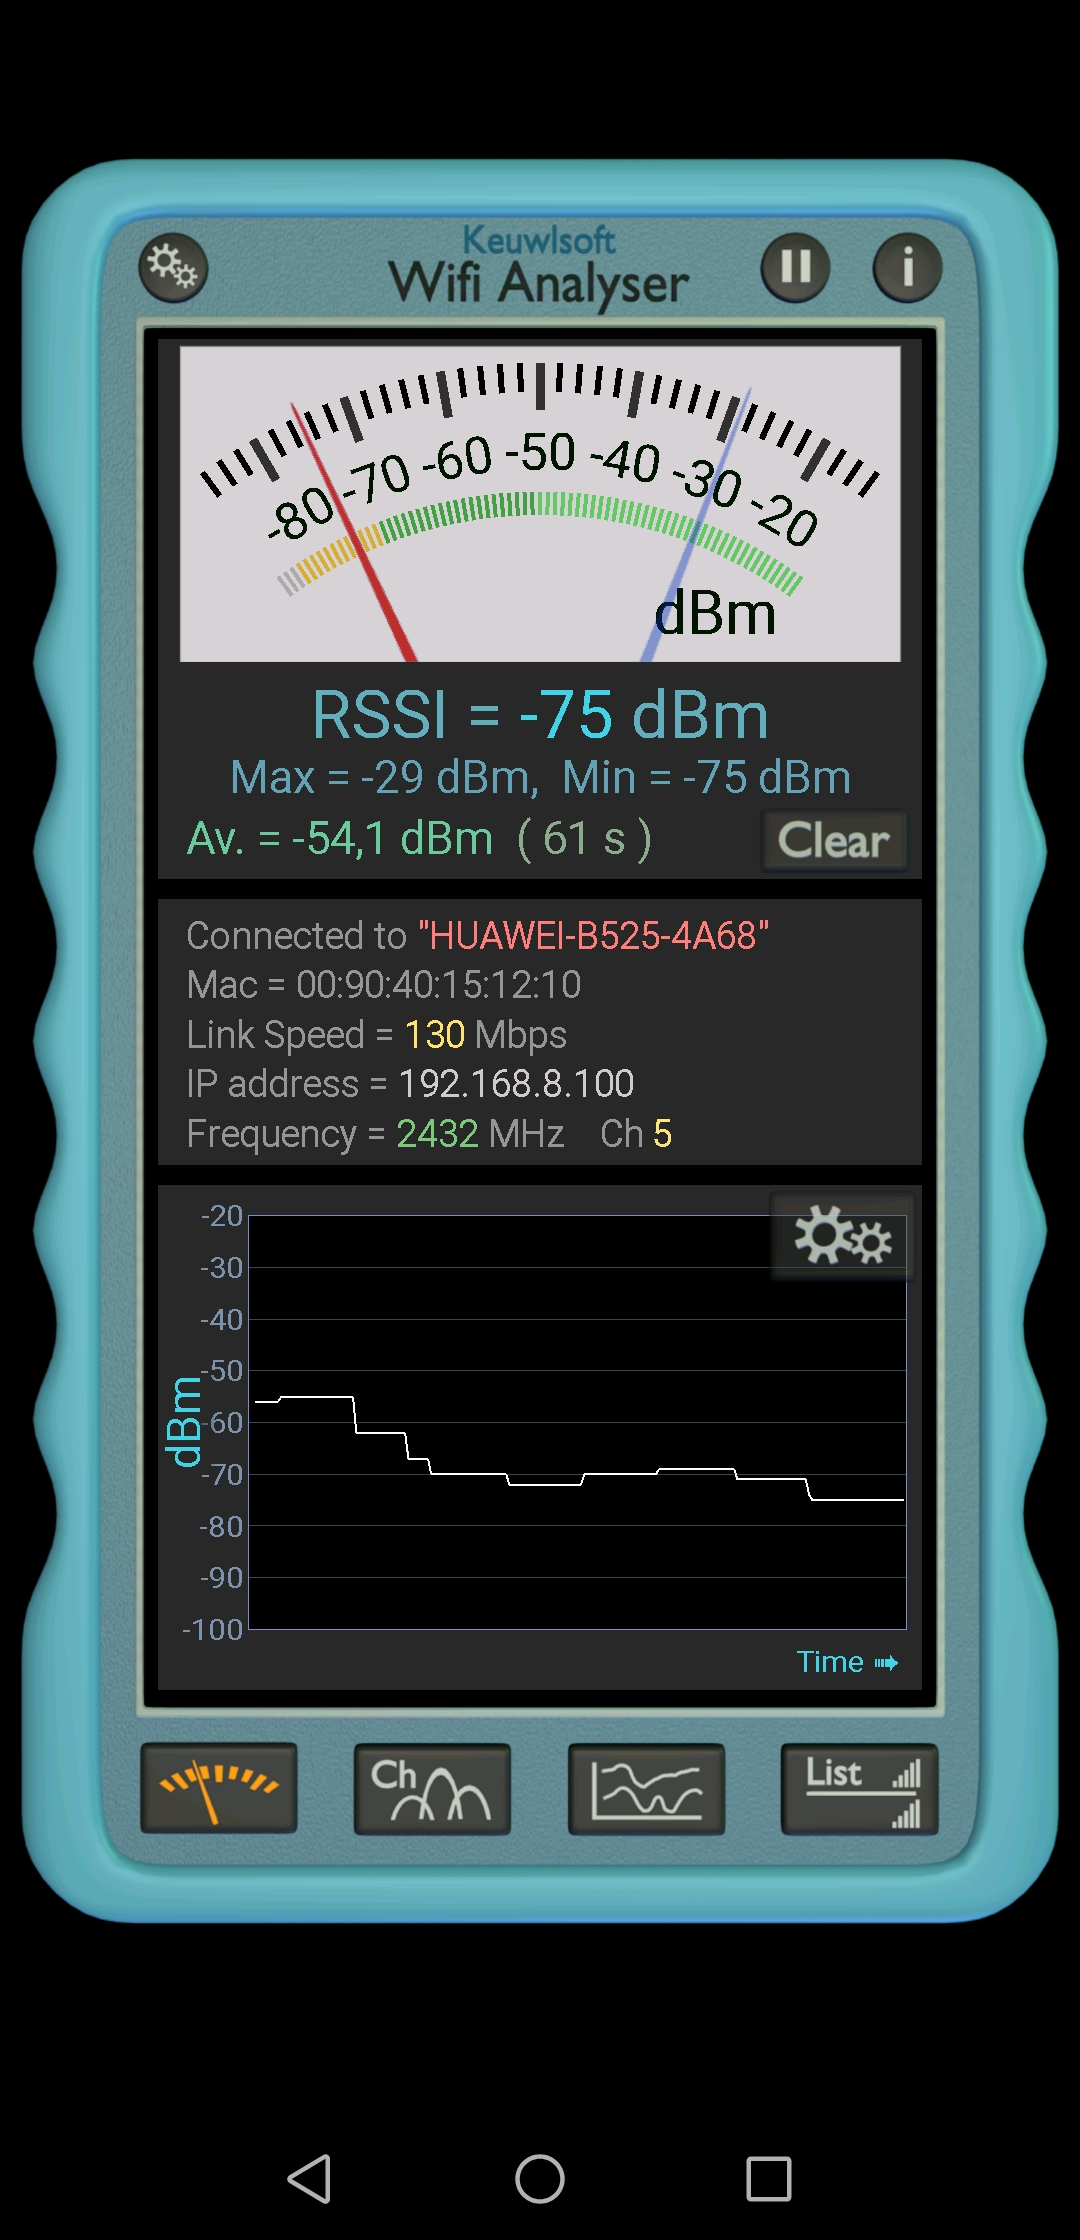 WIFI Analyzer APK. 2452 MHZ. Sound Generator Android keuwlsoft. Clear connection